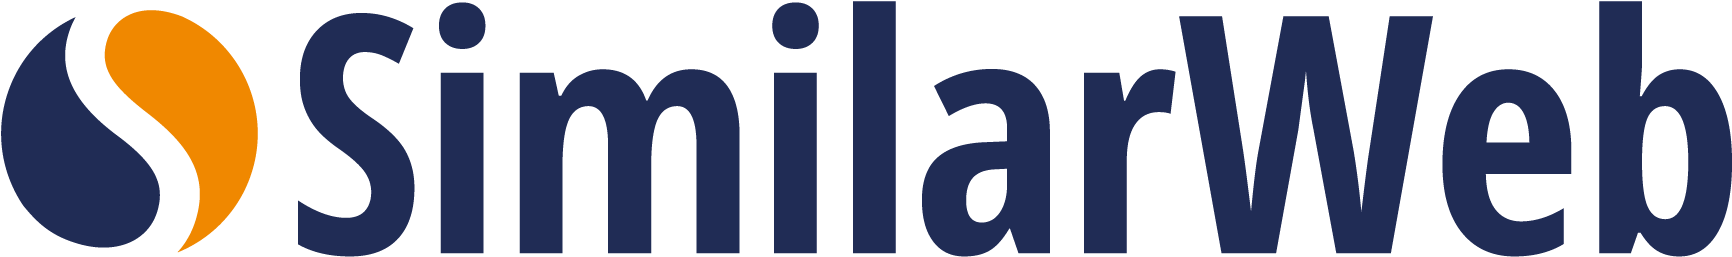 Similarweb Logo - Similar Web Logo Png Clipart (2241x580), Png Download